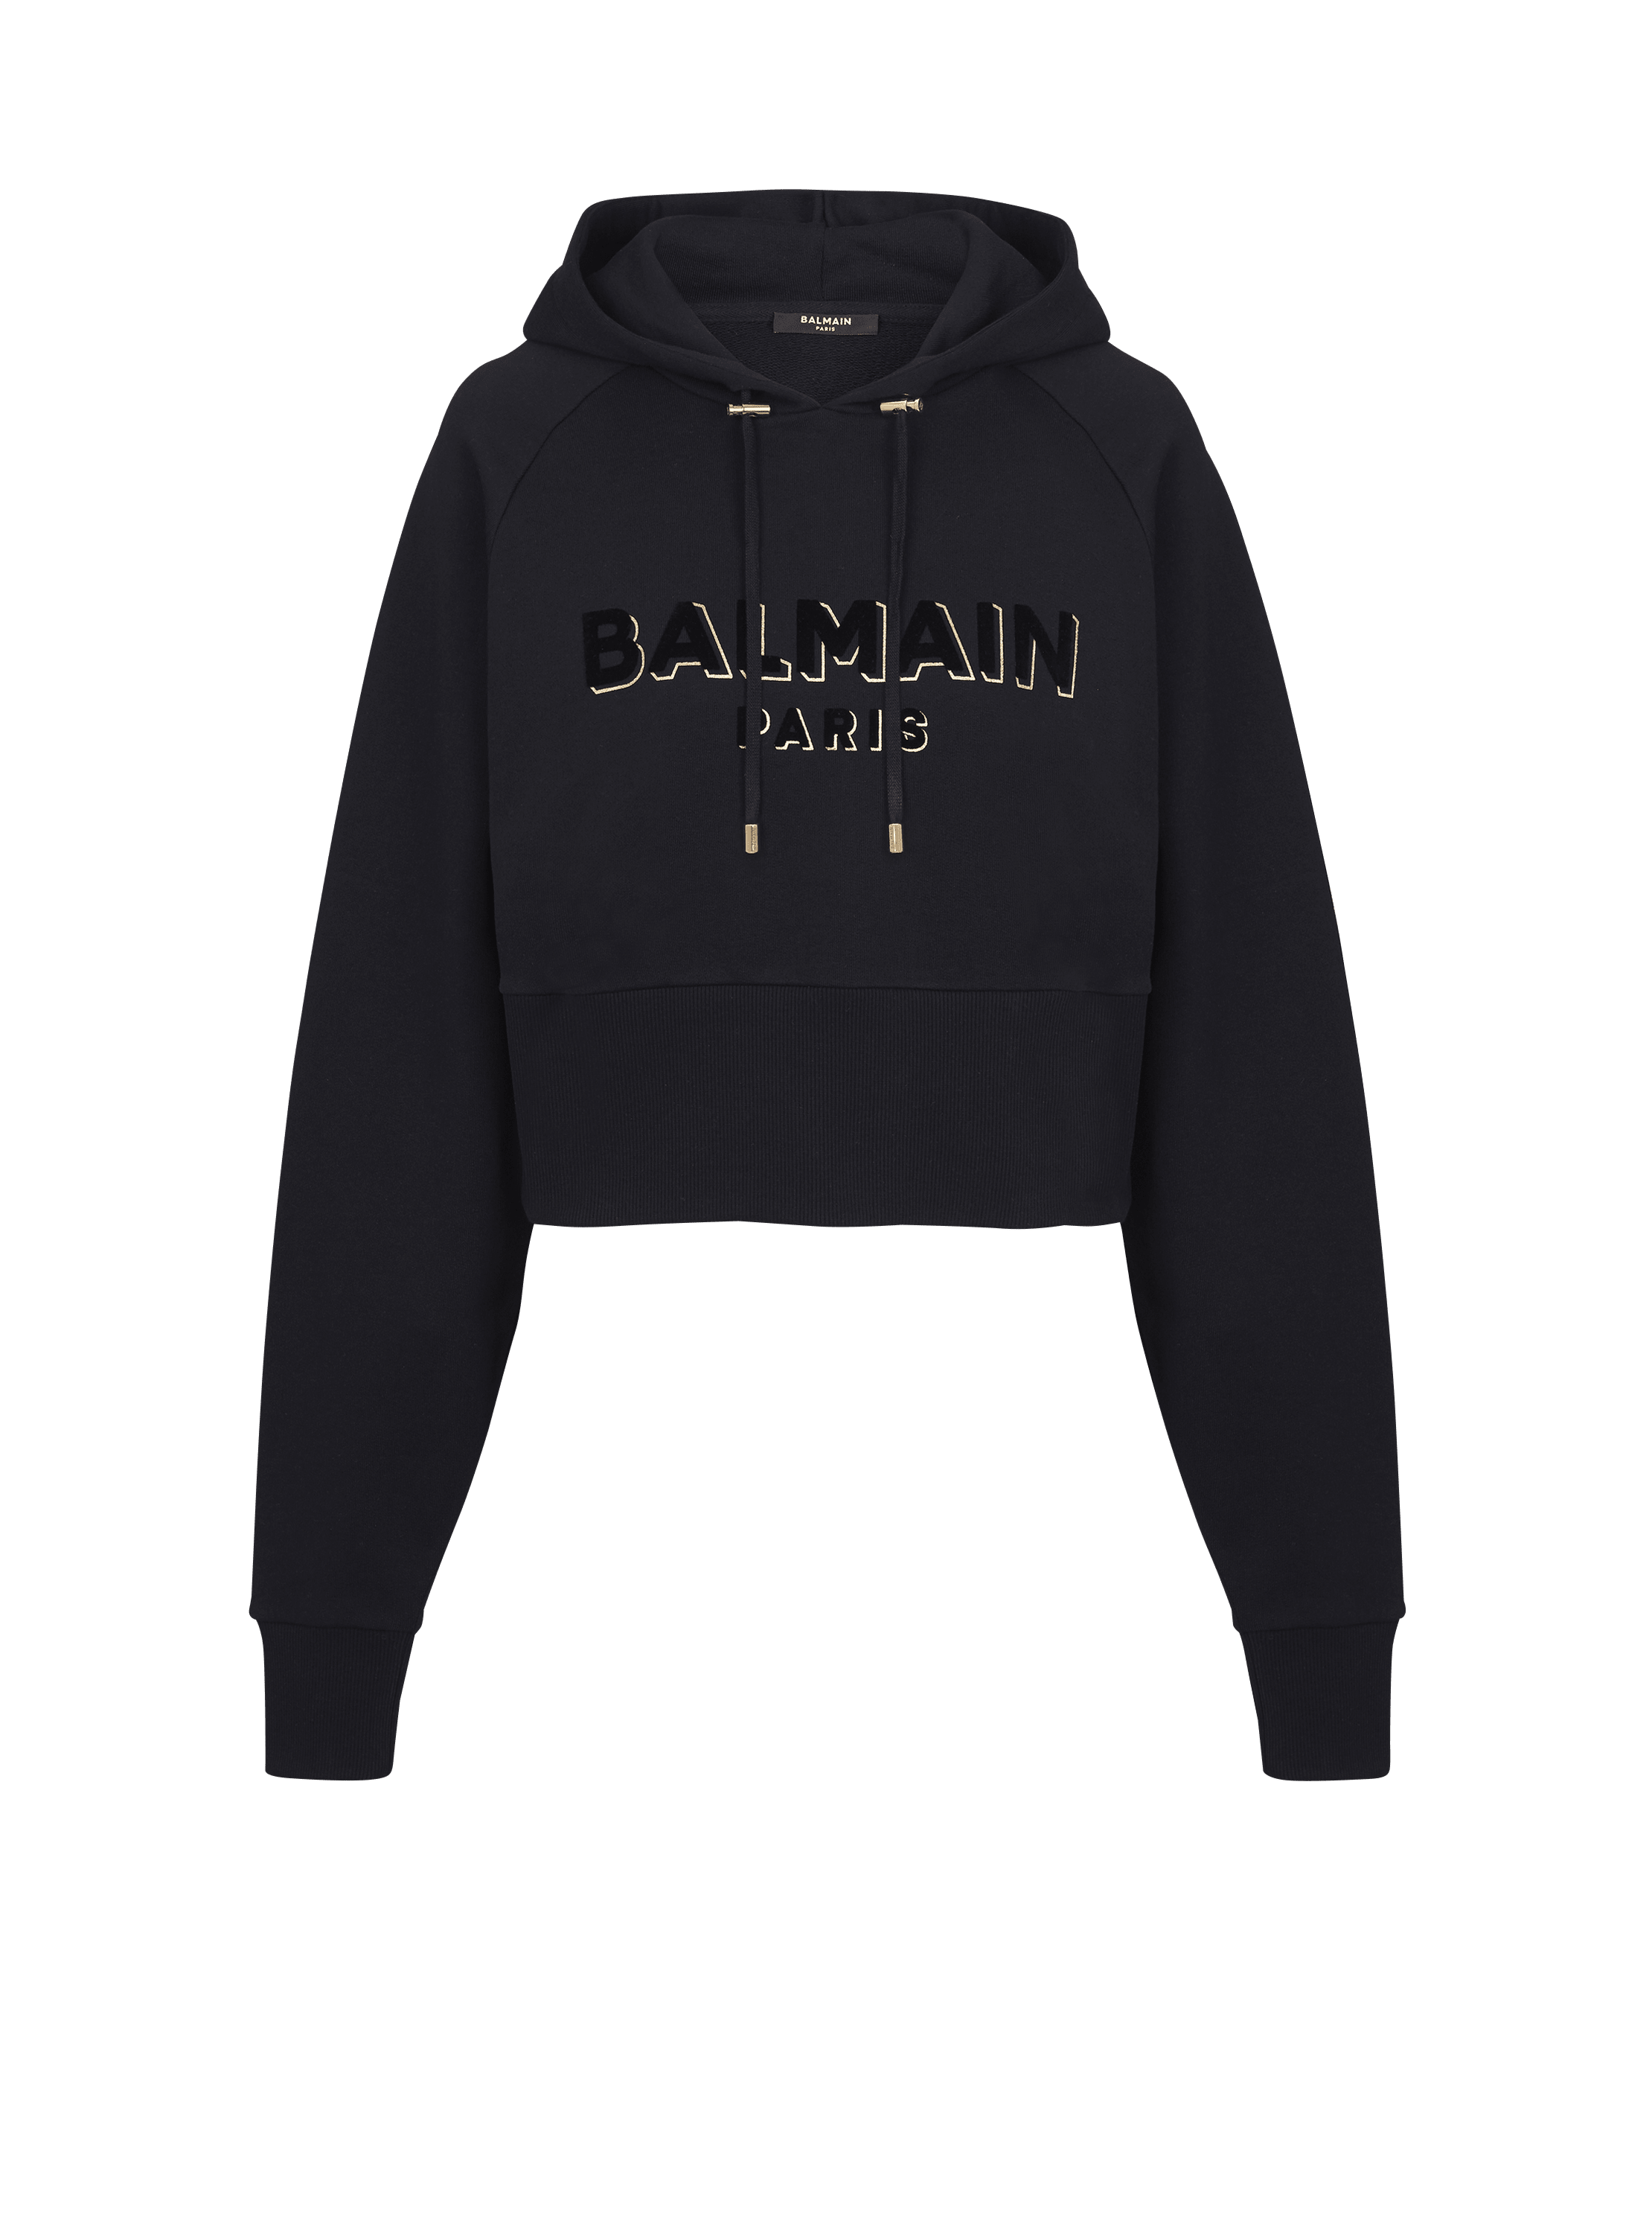 Kurzes Sweatshirt aus Baumwolle mit beflocktem Balmain Metallic-Logo, schwarz, hi-res